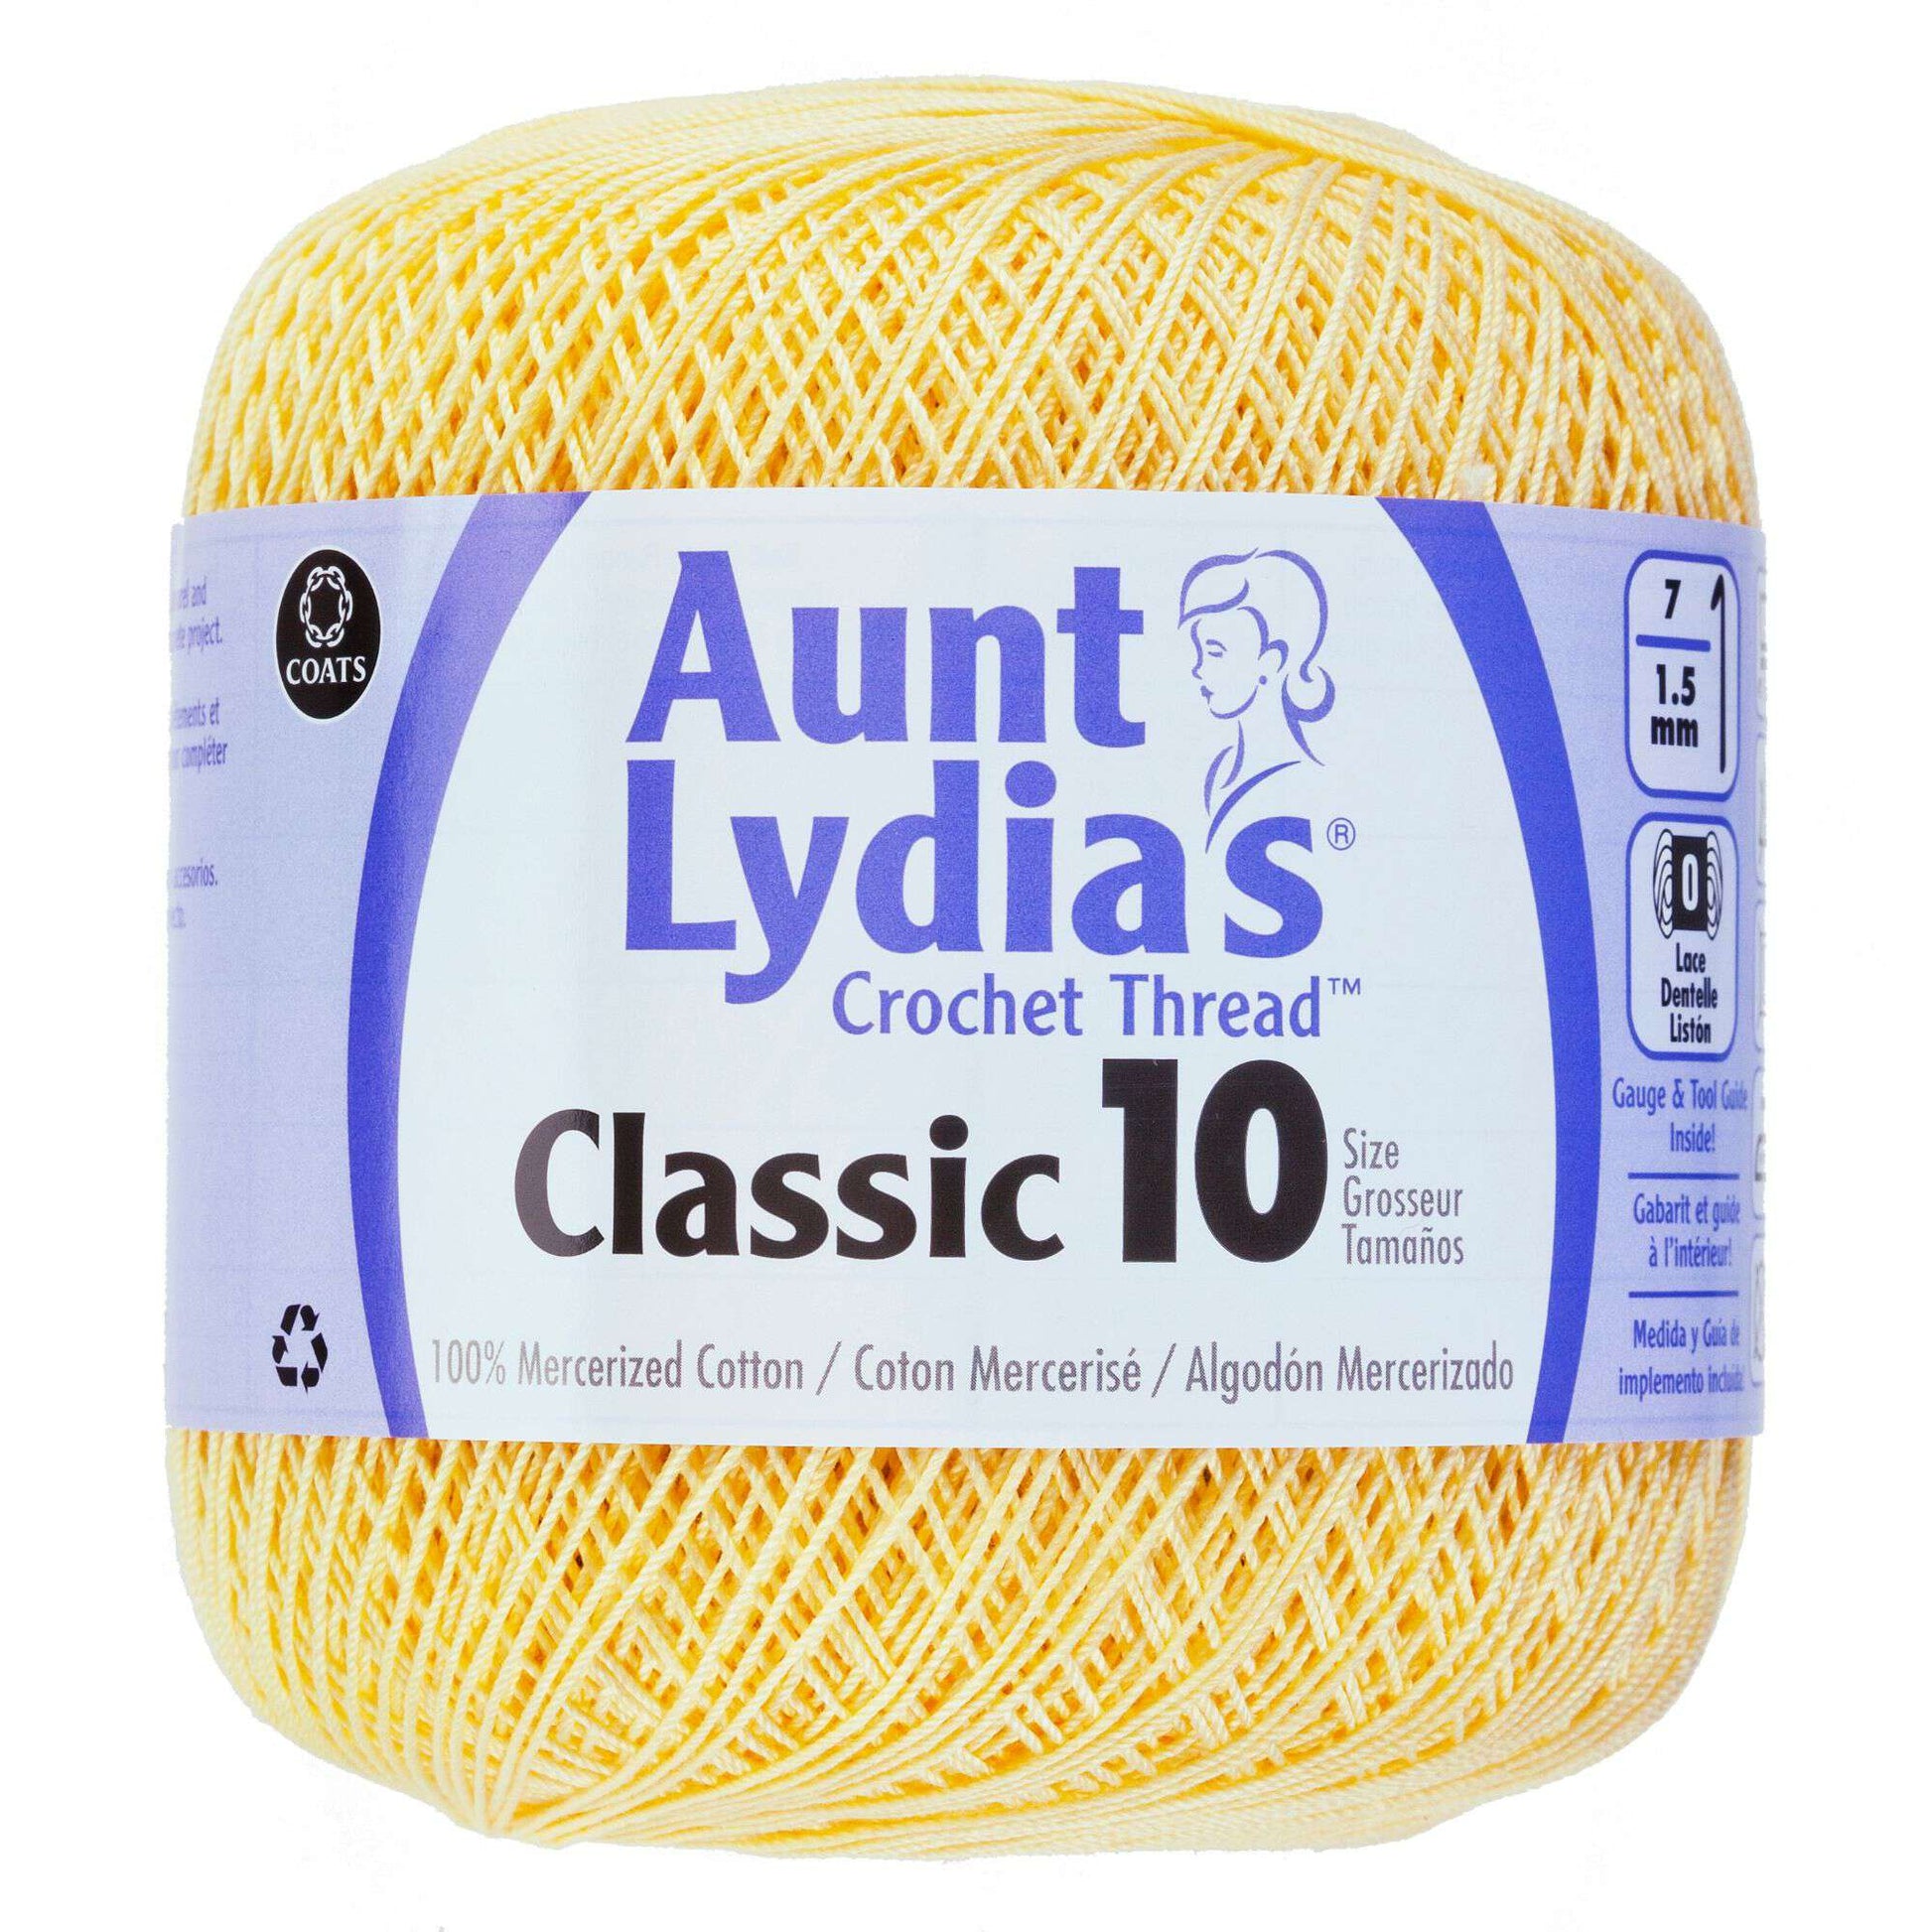 Aunt Lydia's Classic Crochet Thread Size 10 Maize